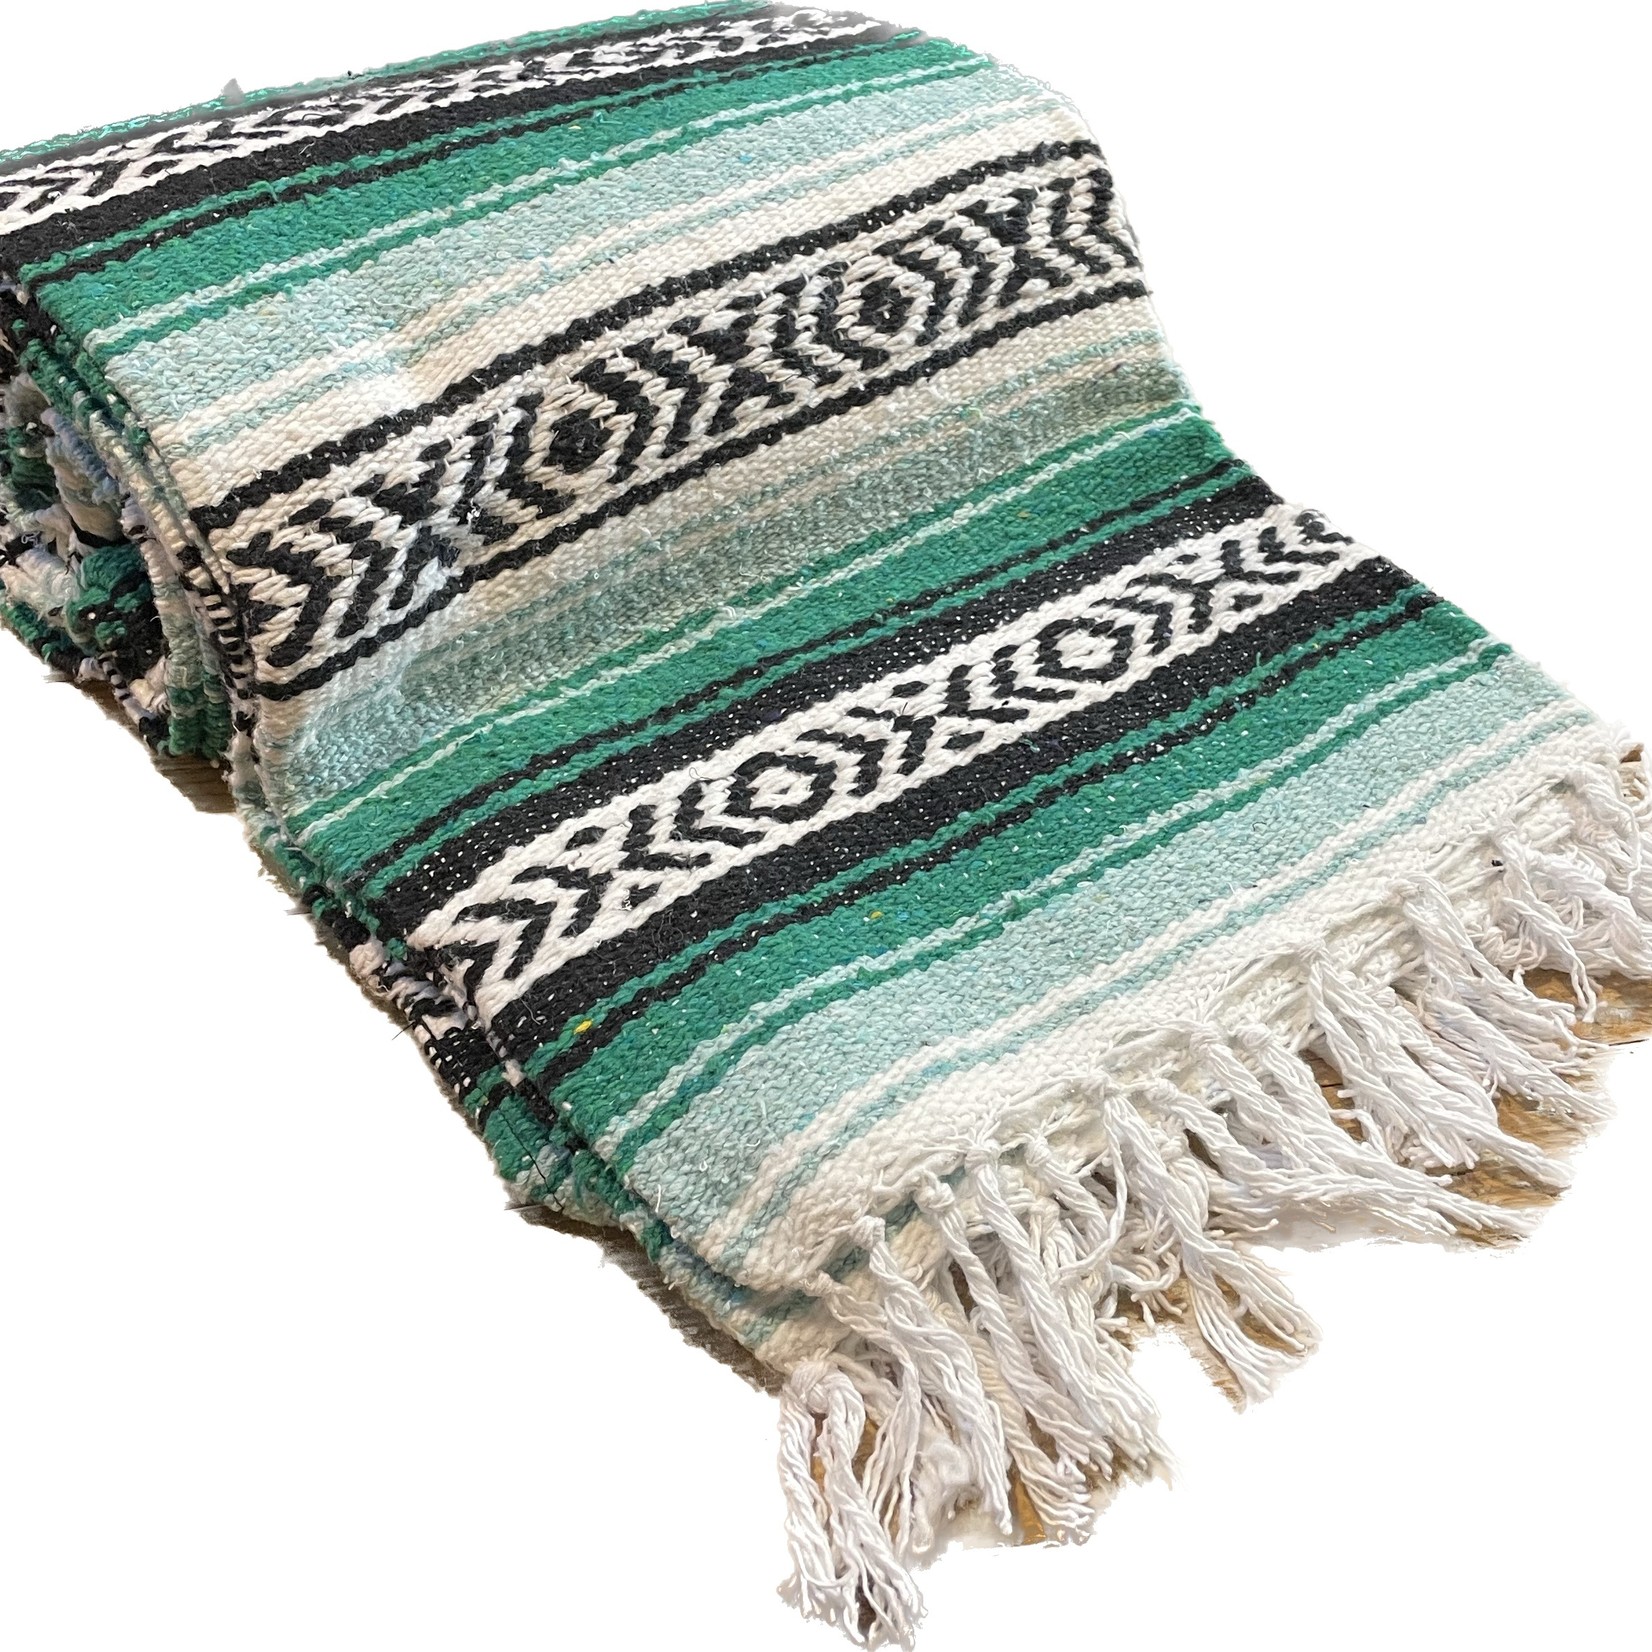 Sercal Mexican Blanket.